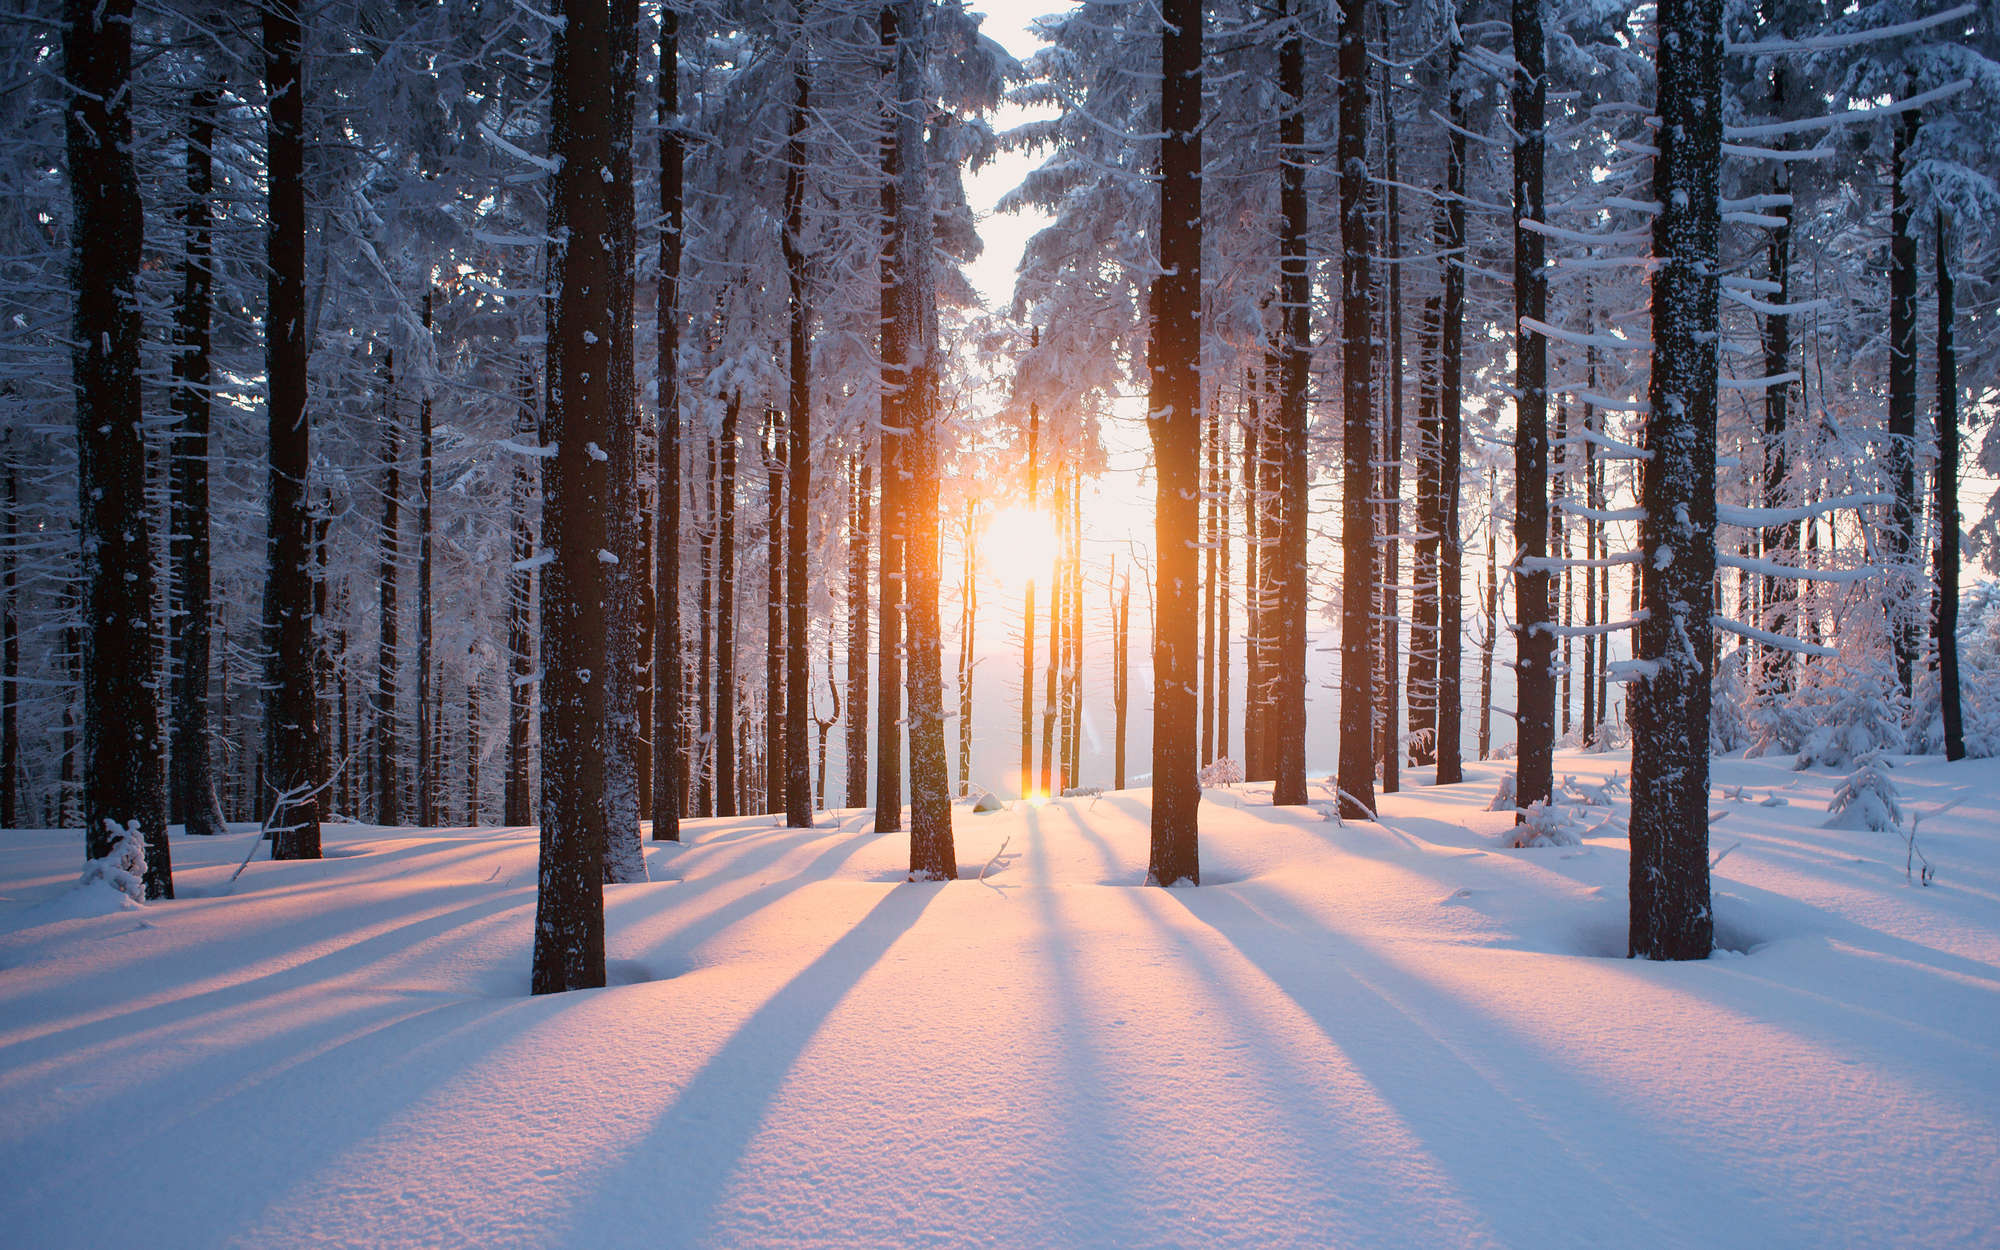             Fotomurali neve nella foresta invernale - vello liscio madreperlato
        